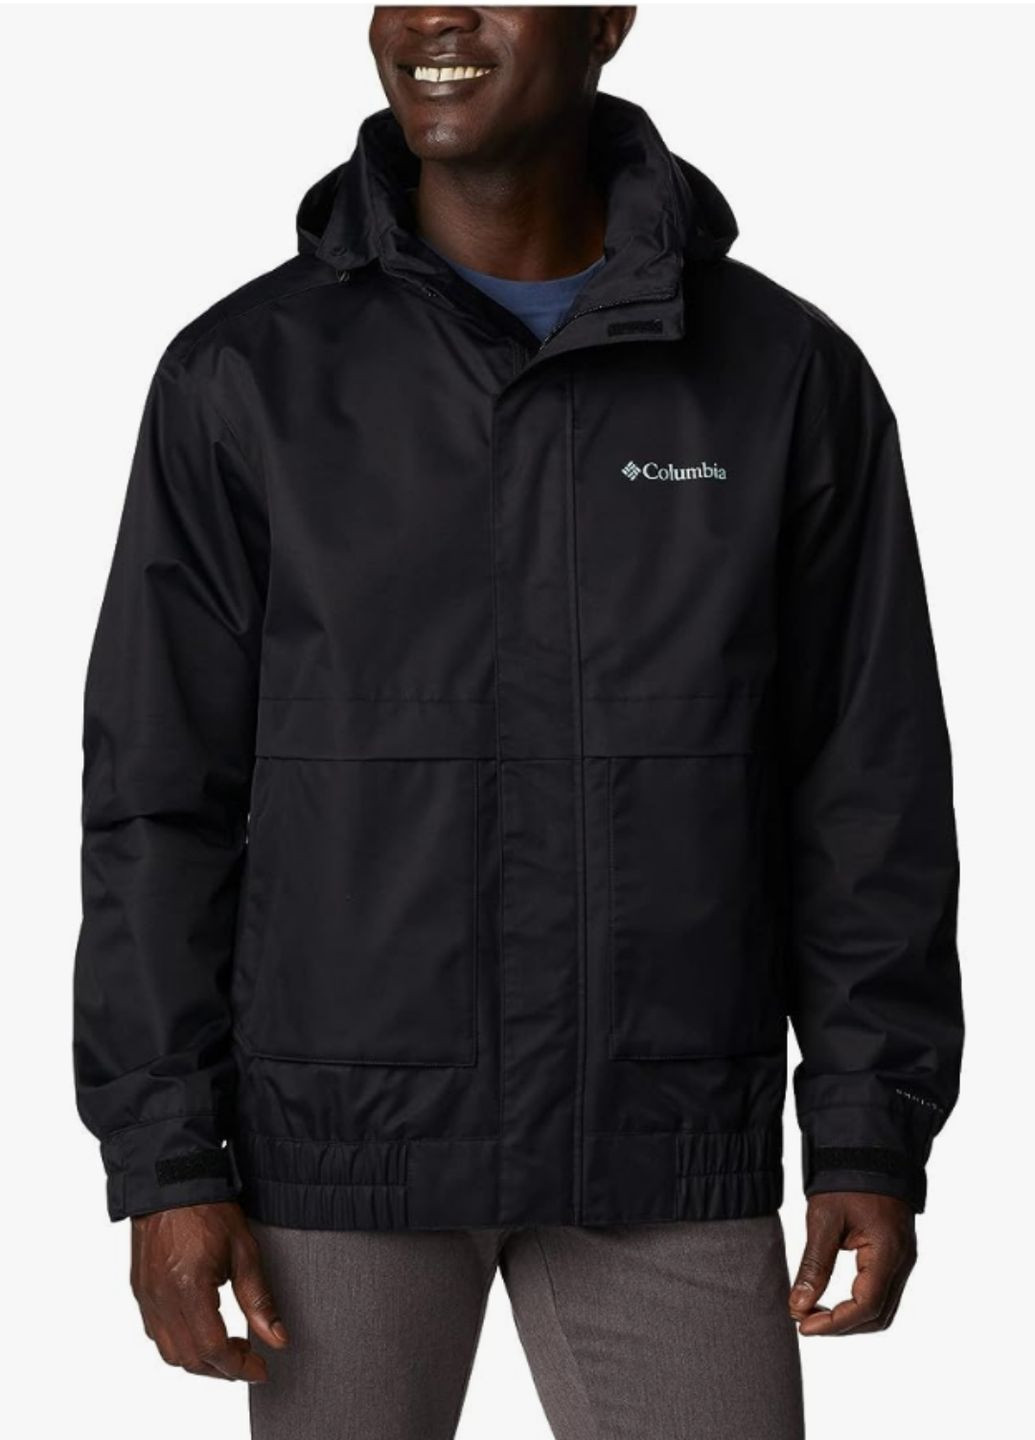 Черная демисезонная мужская куртка водонепроницаемая, дышащая, 48 р. Columbia Boundary Springs